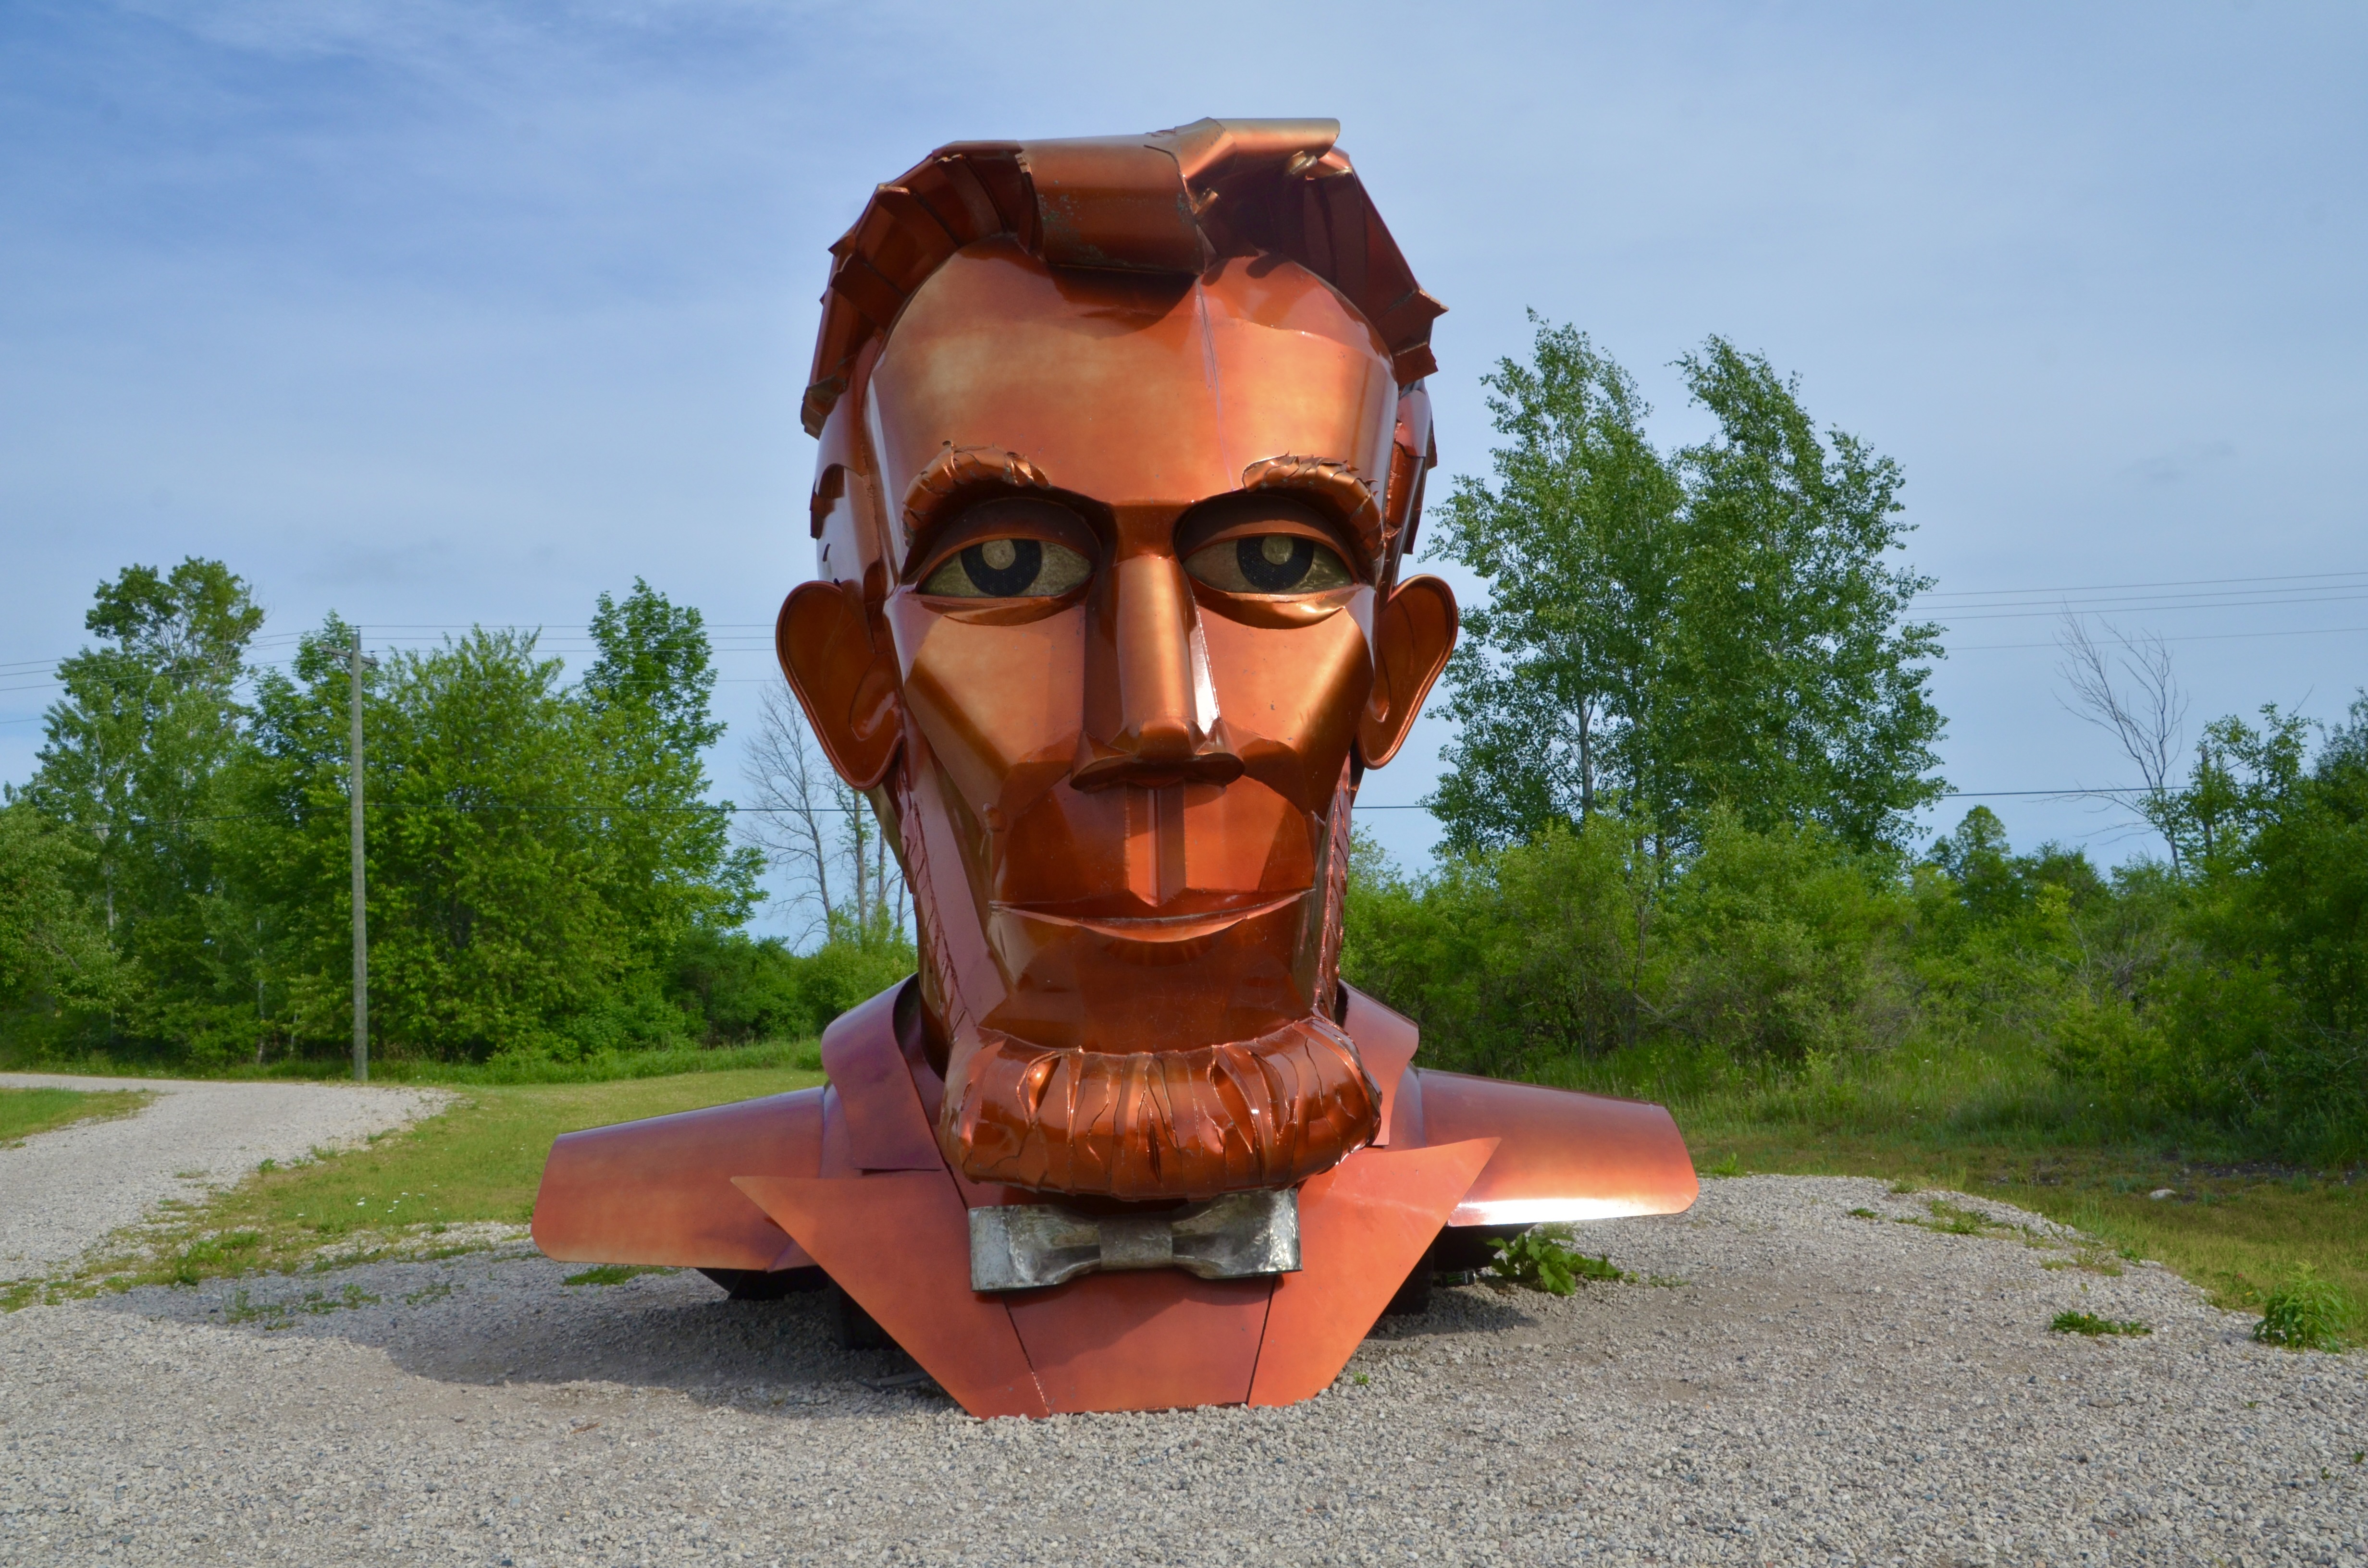 Abraham Lincoln Sculpture at Awakon Park in Onaway, June